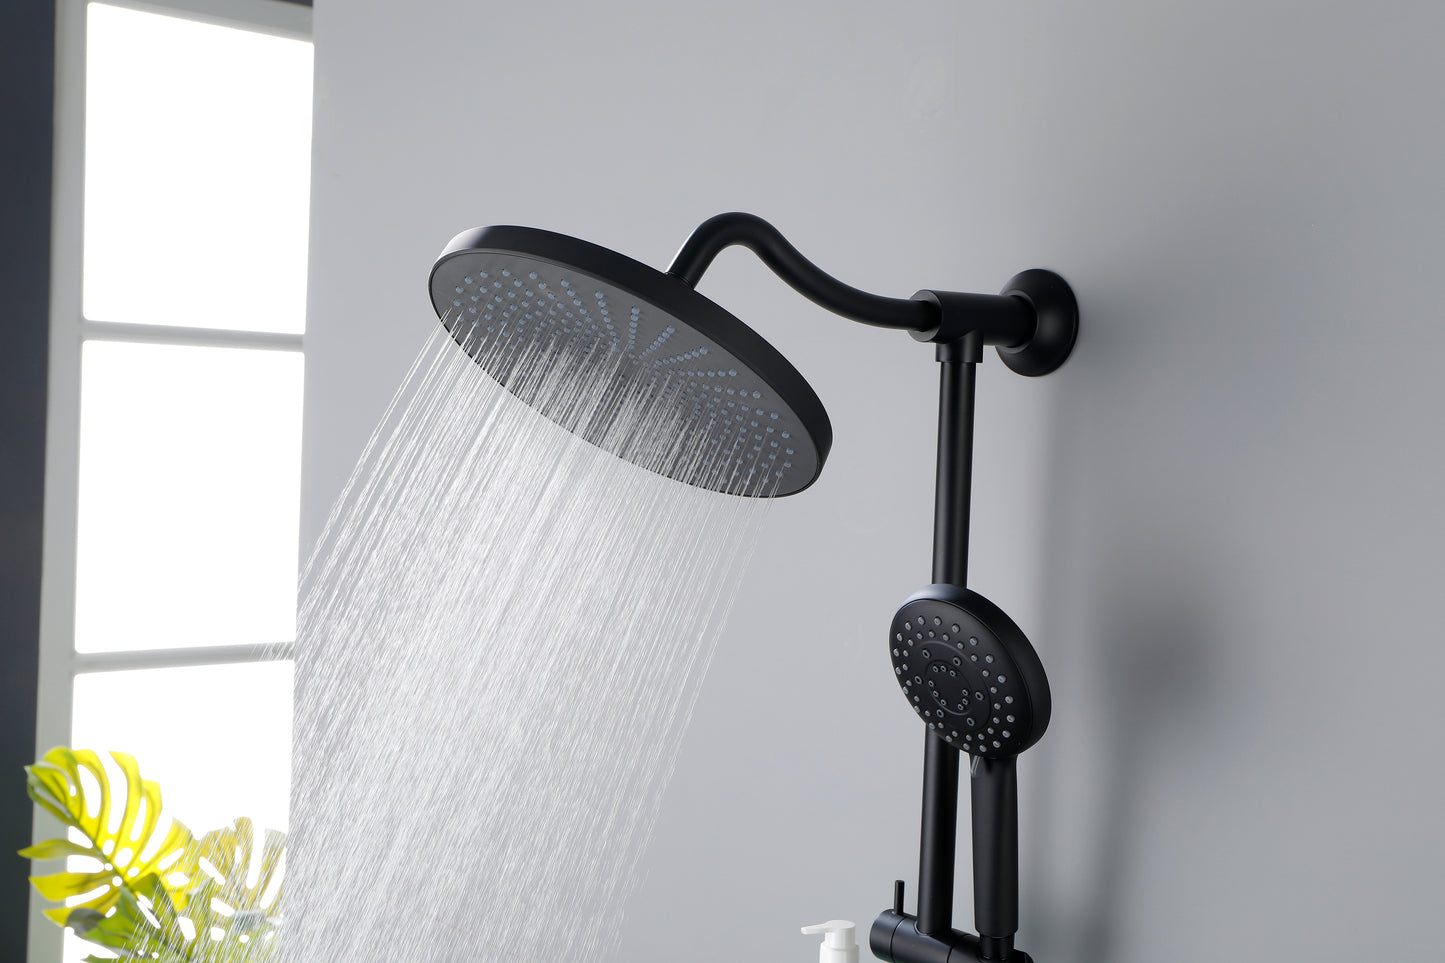 ShowerSpas Shower System, with 10" Rain Showerhead, 4-Function Hand Shower, Adjustable Slide Bar and Soap Dish, Matte Black Finish